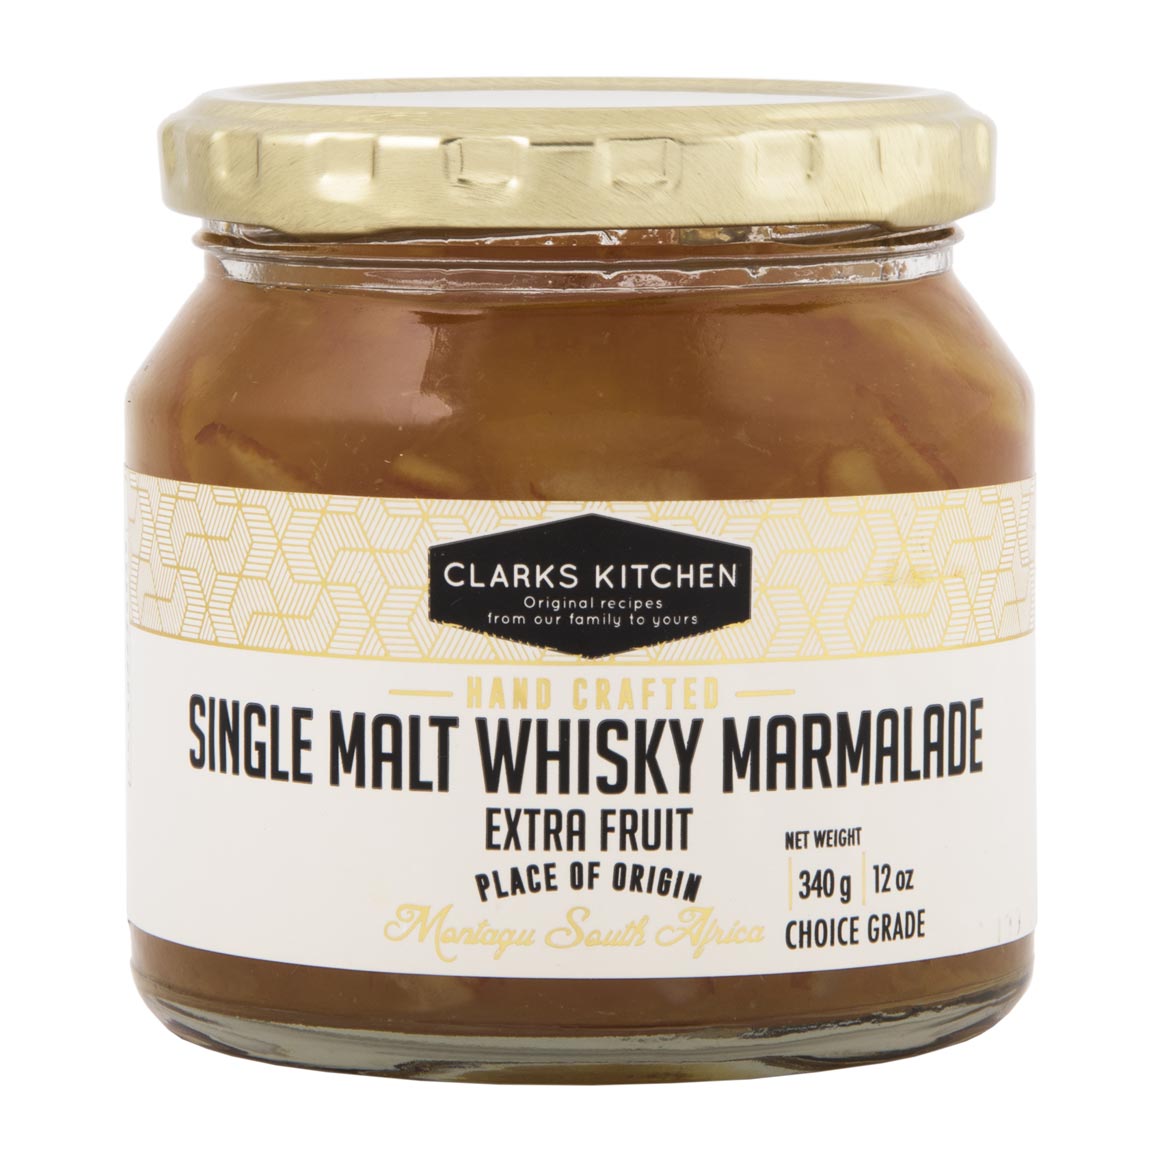 Clarks Kitchen Single Malt Whisky Marmalade 340 G 700083697035 ?V=Yv2J&o=eyJidWNrZXQiOiJ3dy1vbmxpbmUtaW1hZ2UtcmVzaXplIiwia2V5IjoiaW1hZ2VzL2VsYXN0aWNlcmEvcHJvZHVjdHMvaGVyby8yMDE4LTAyLTAyLzcwMDA4MzY5NzAzNV9oZXJvLmpwZyJ9&